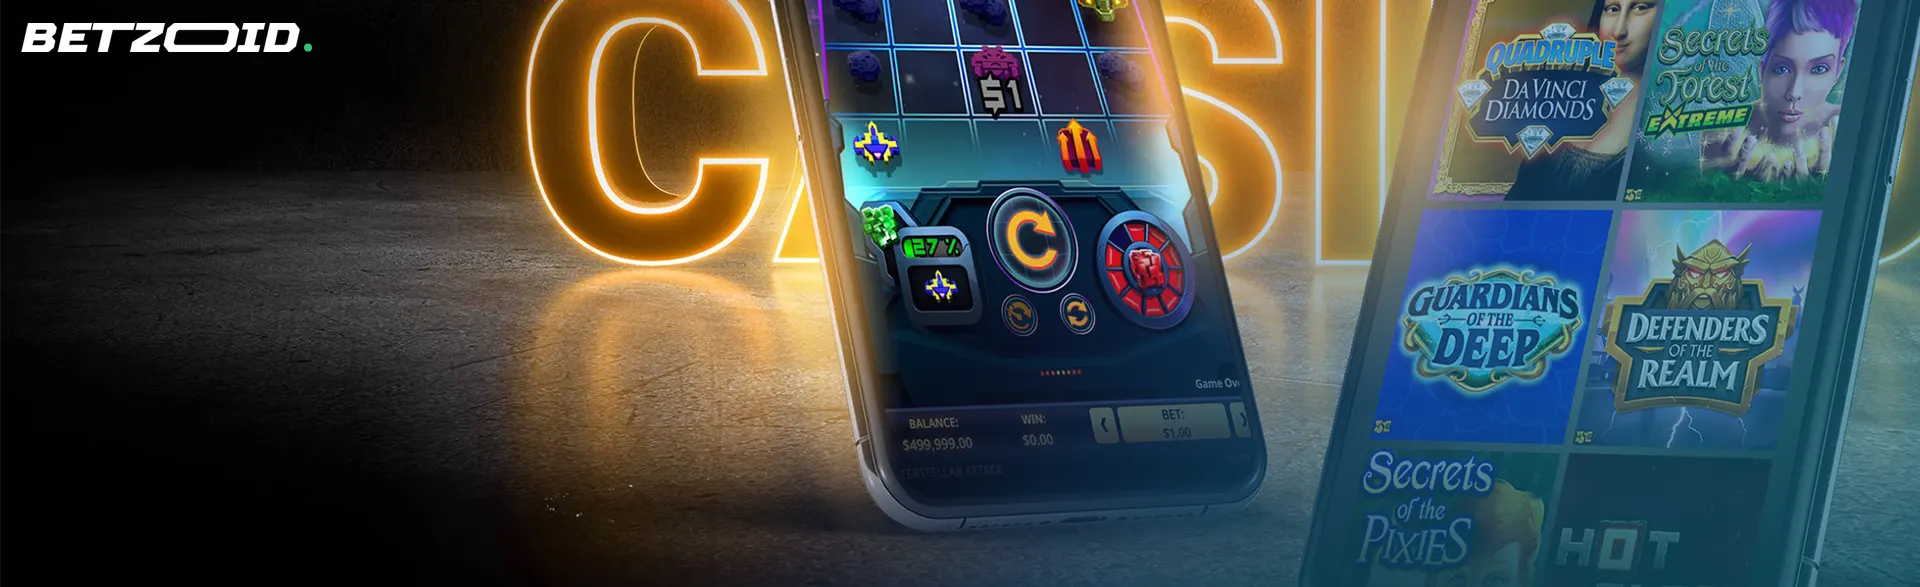 A mobile phone displays casino mobile phone casino games.